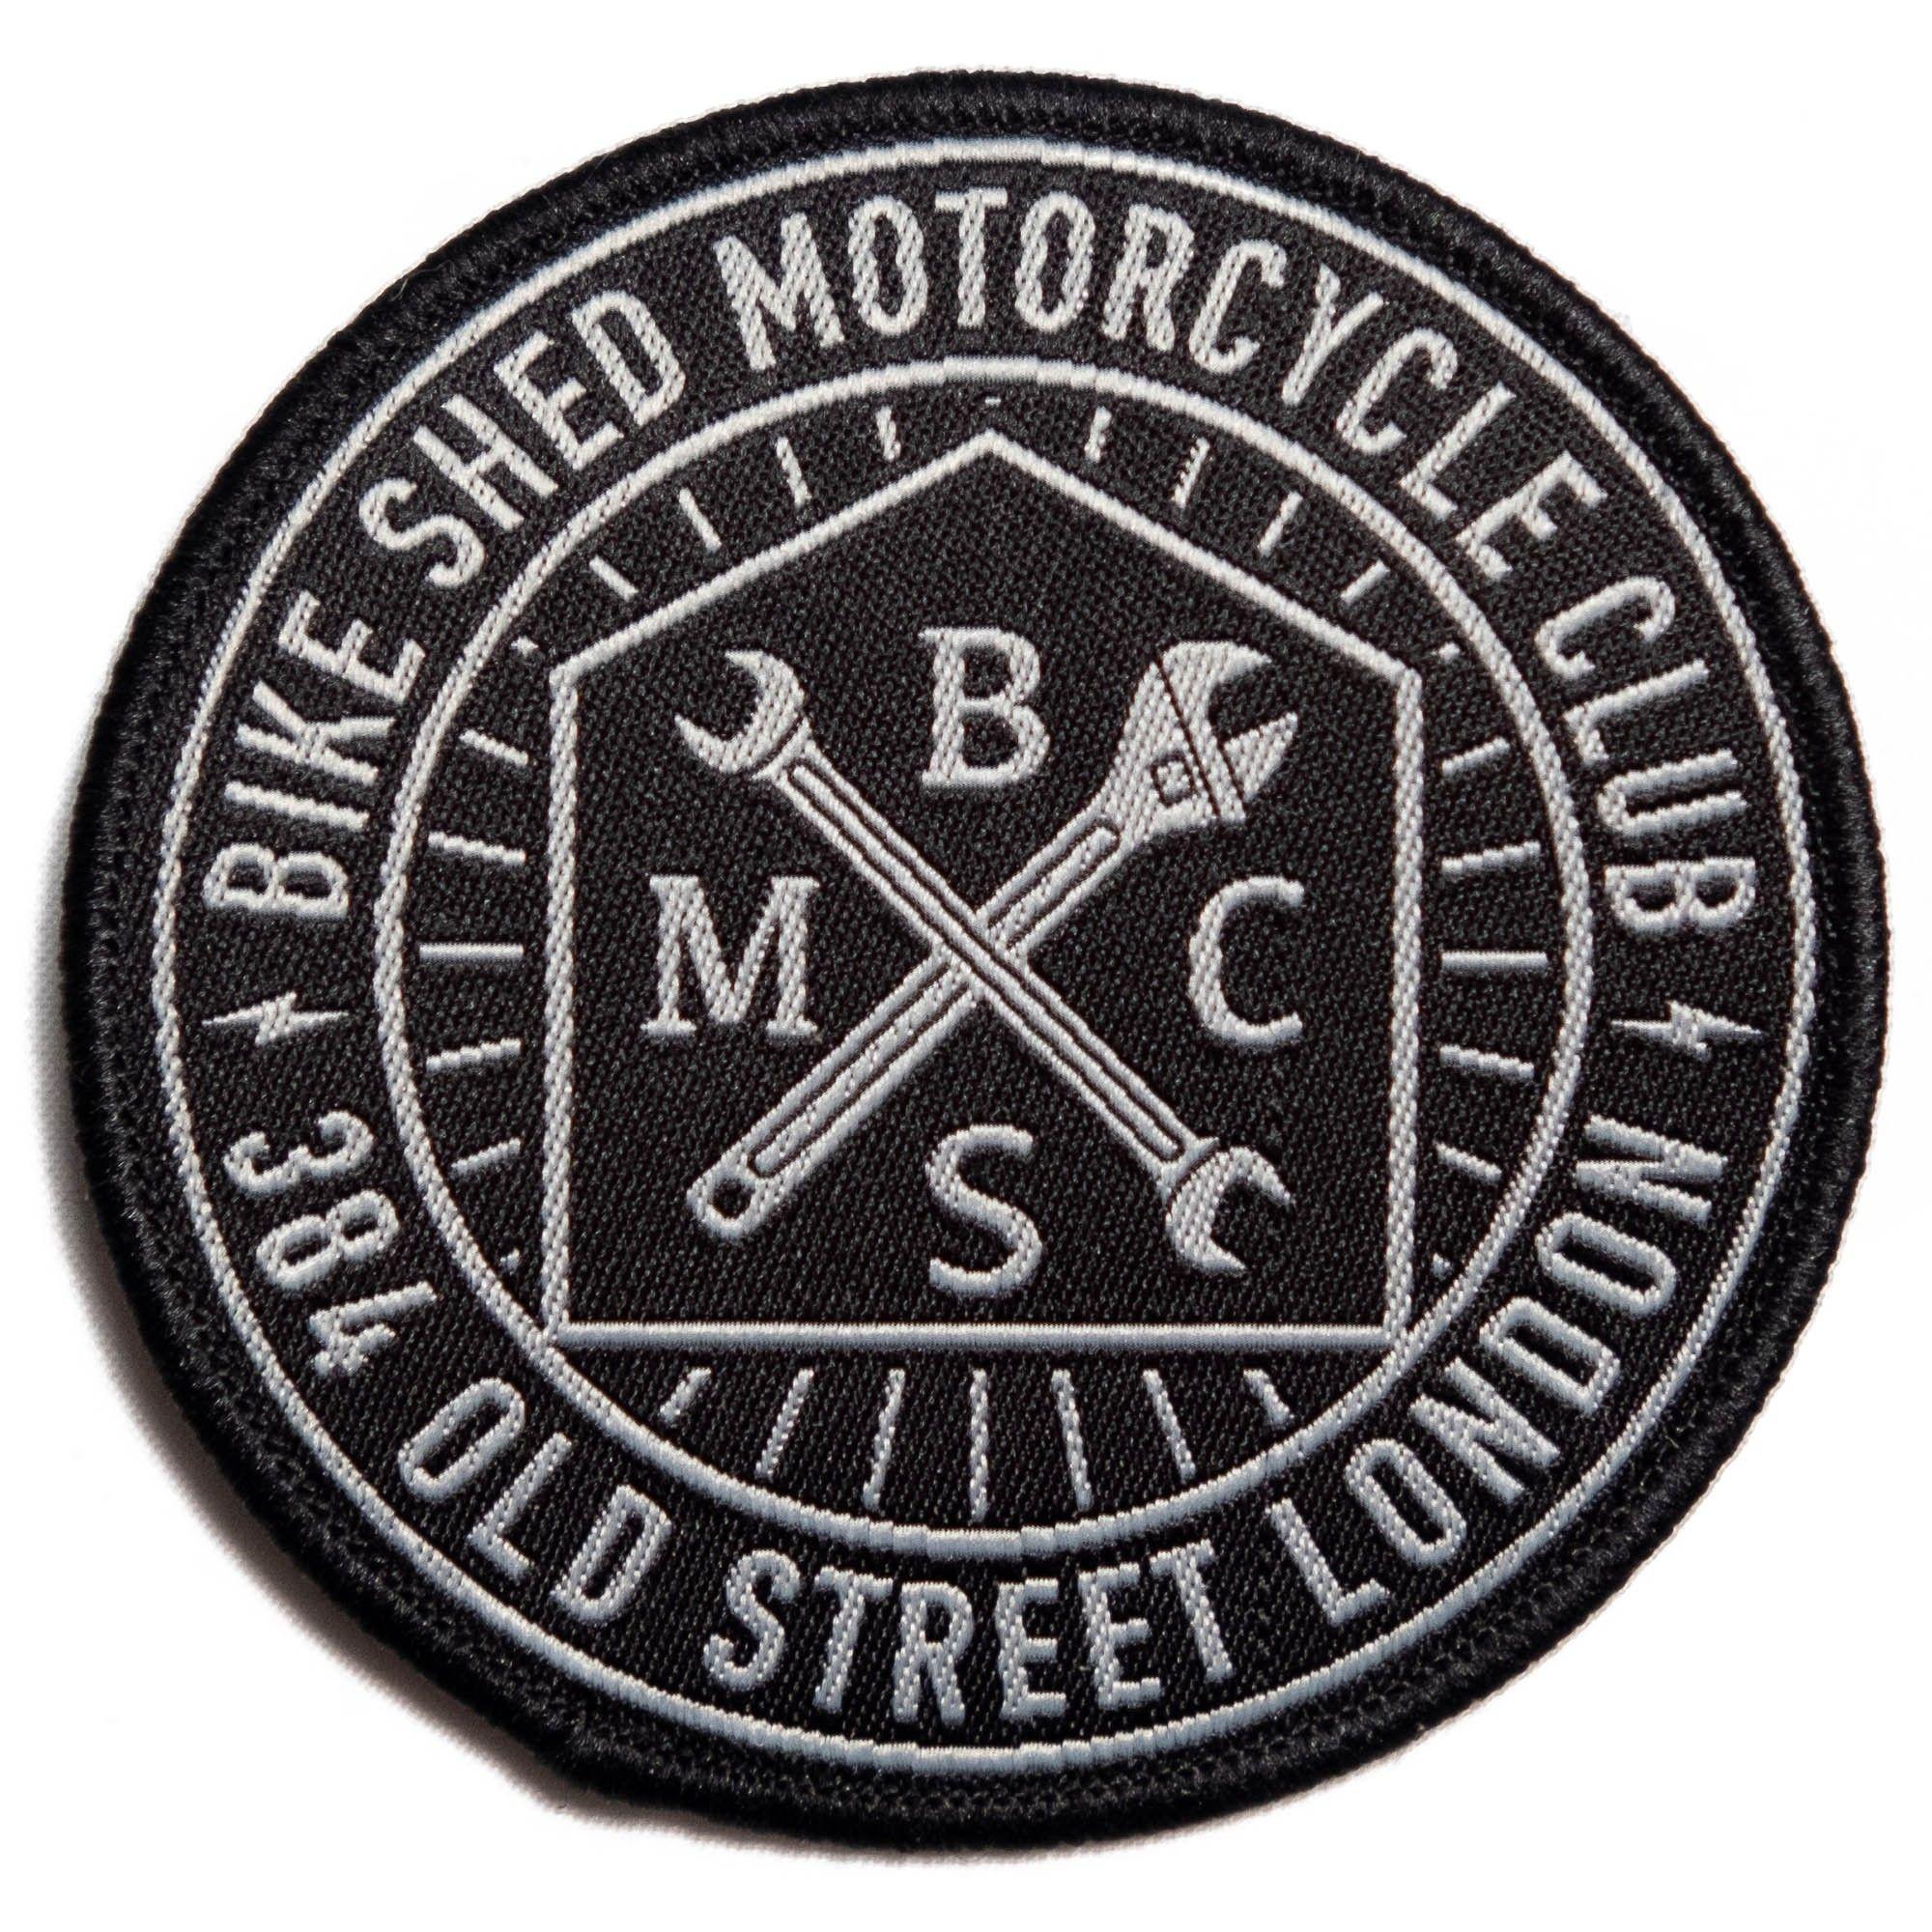 BSMC Logo - BSMC ROUNDEL PATCH WHITE Rider London